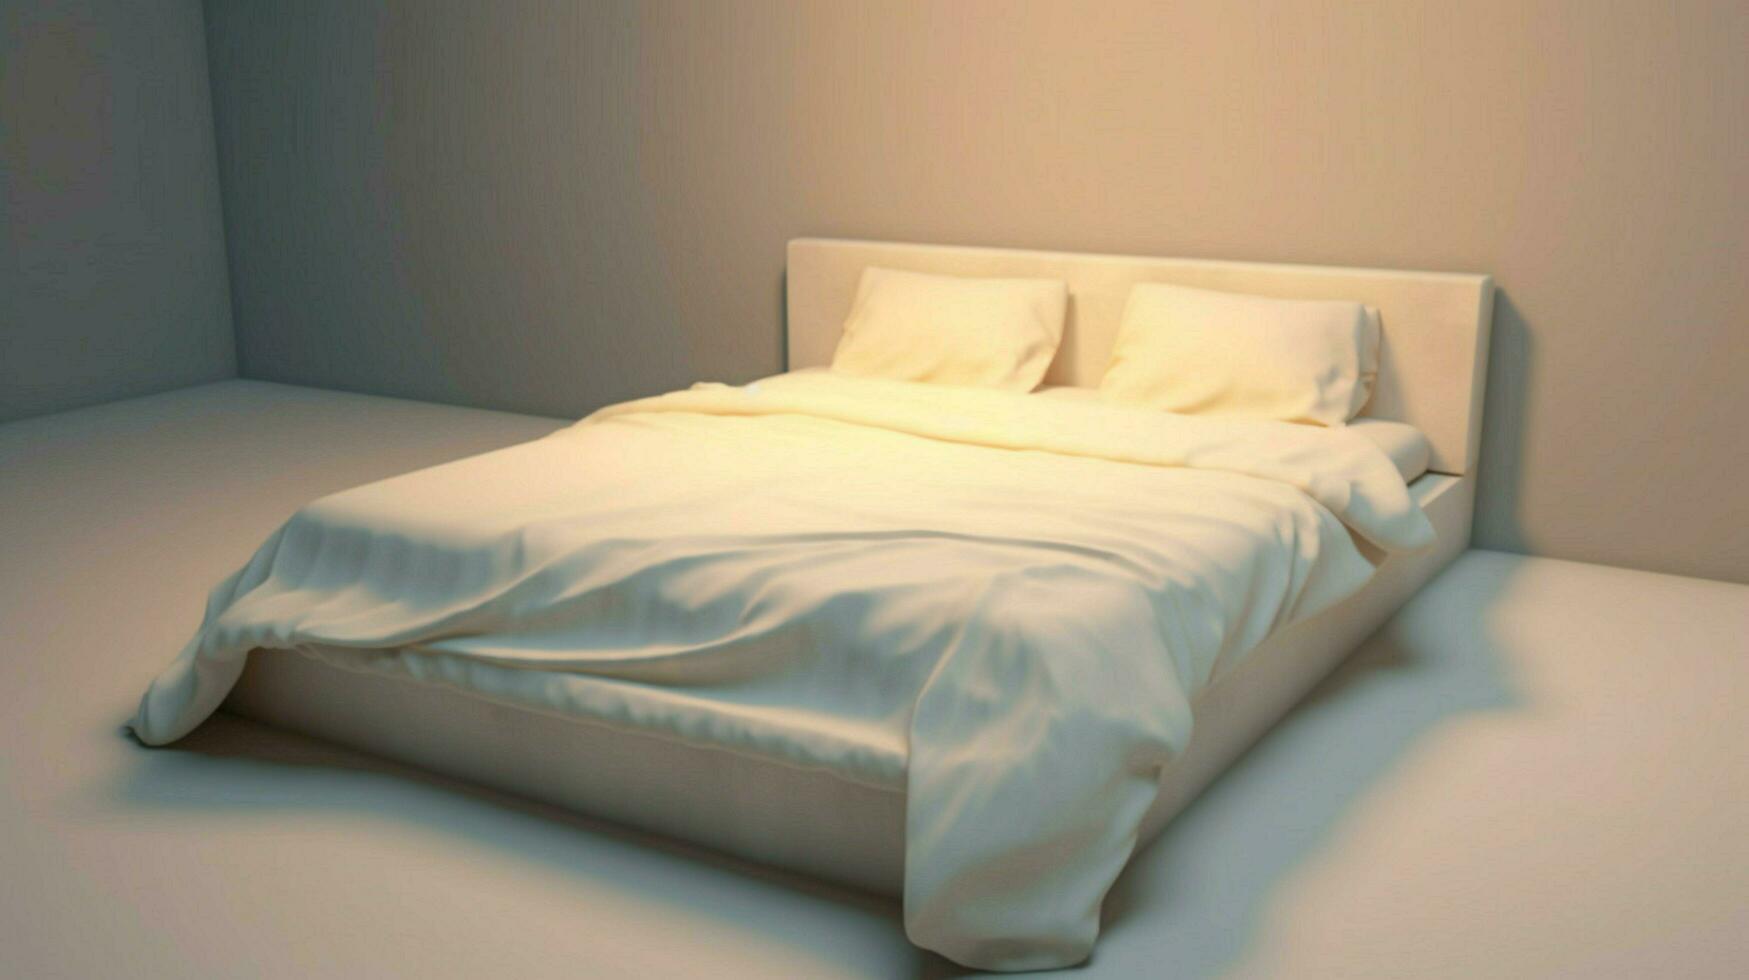 schoon blanco bed foto